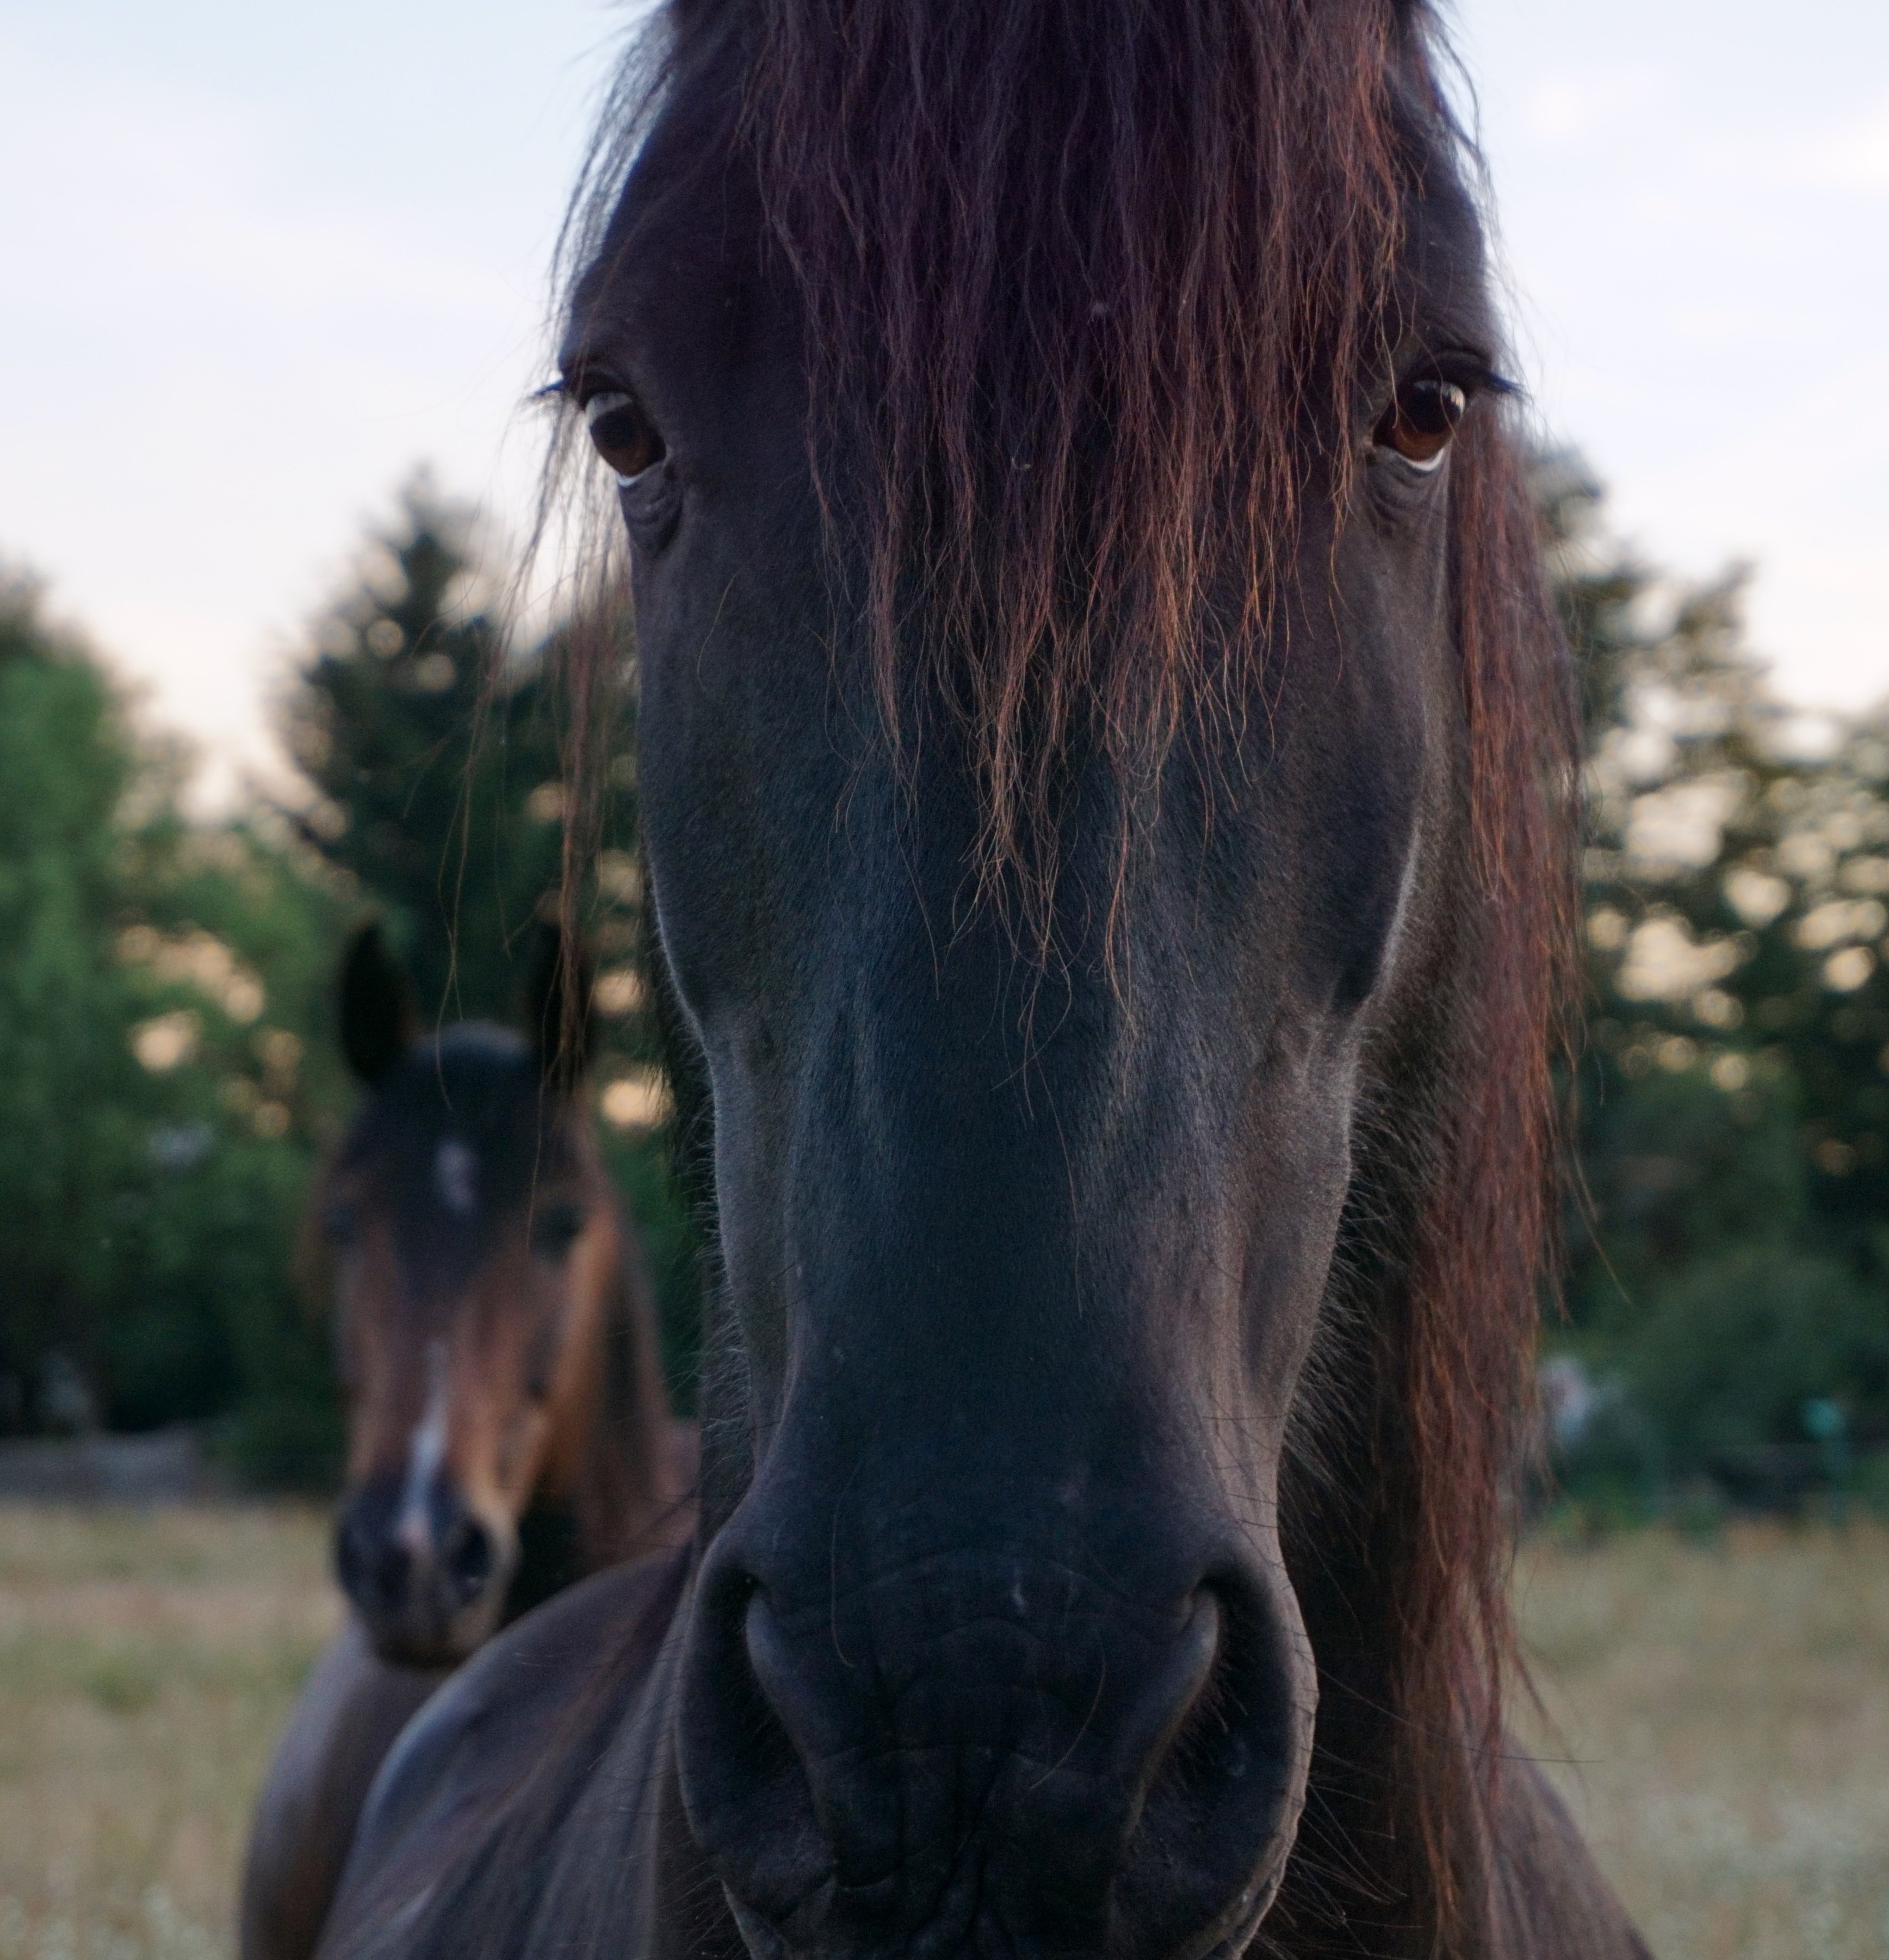 Chic Horse Head Portrait free image download